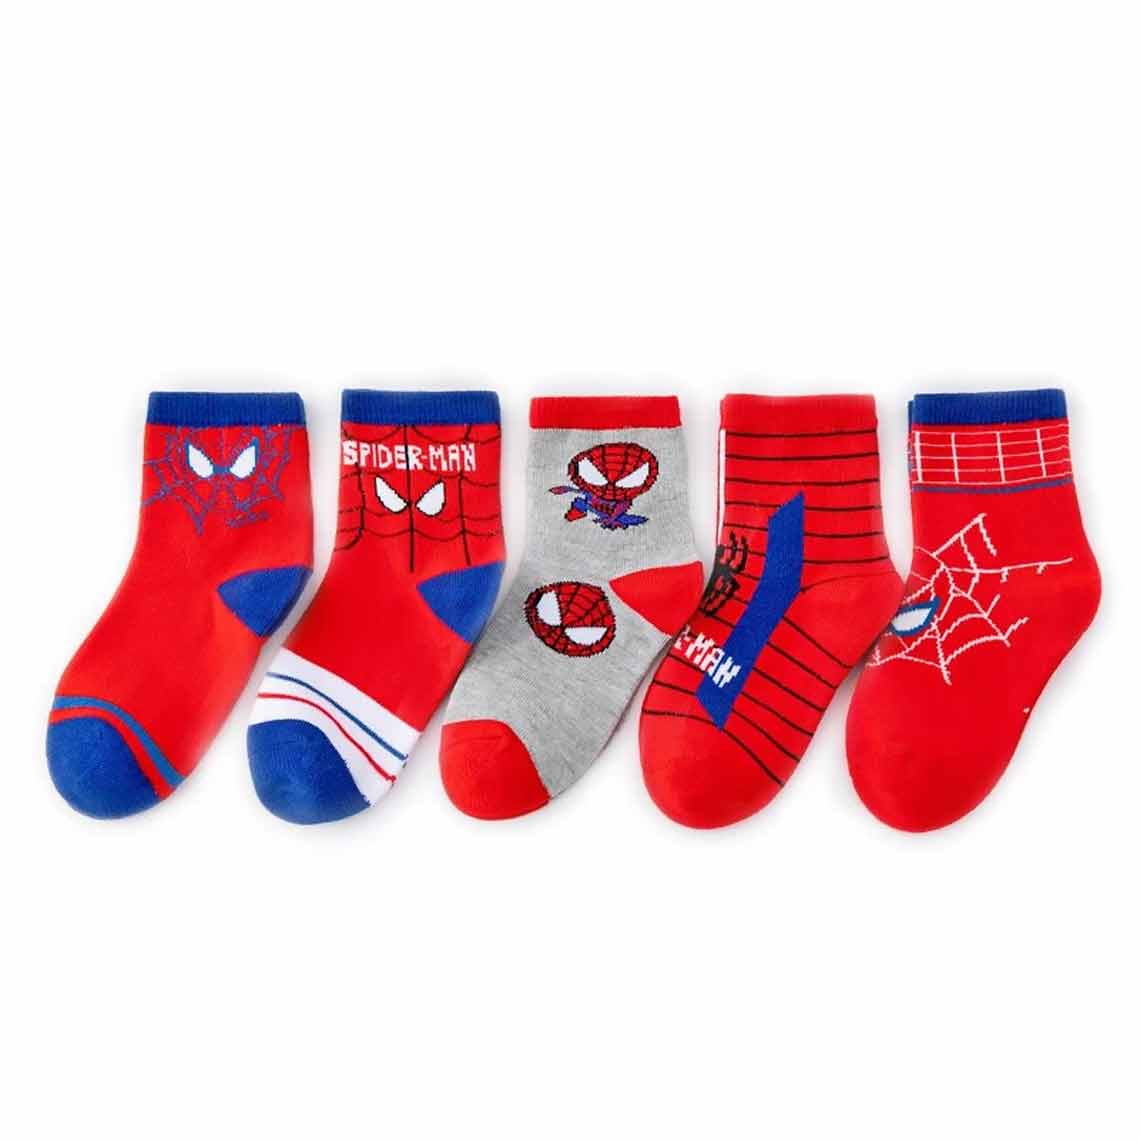 5 x Pairs of Spiderman Socks, Spidey Children Short Cotton Socks - Novelty Socks by Fashion Accessories